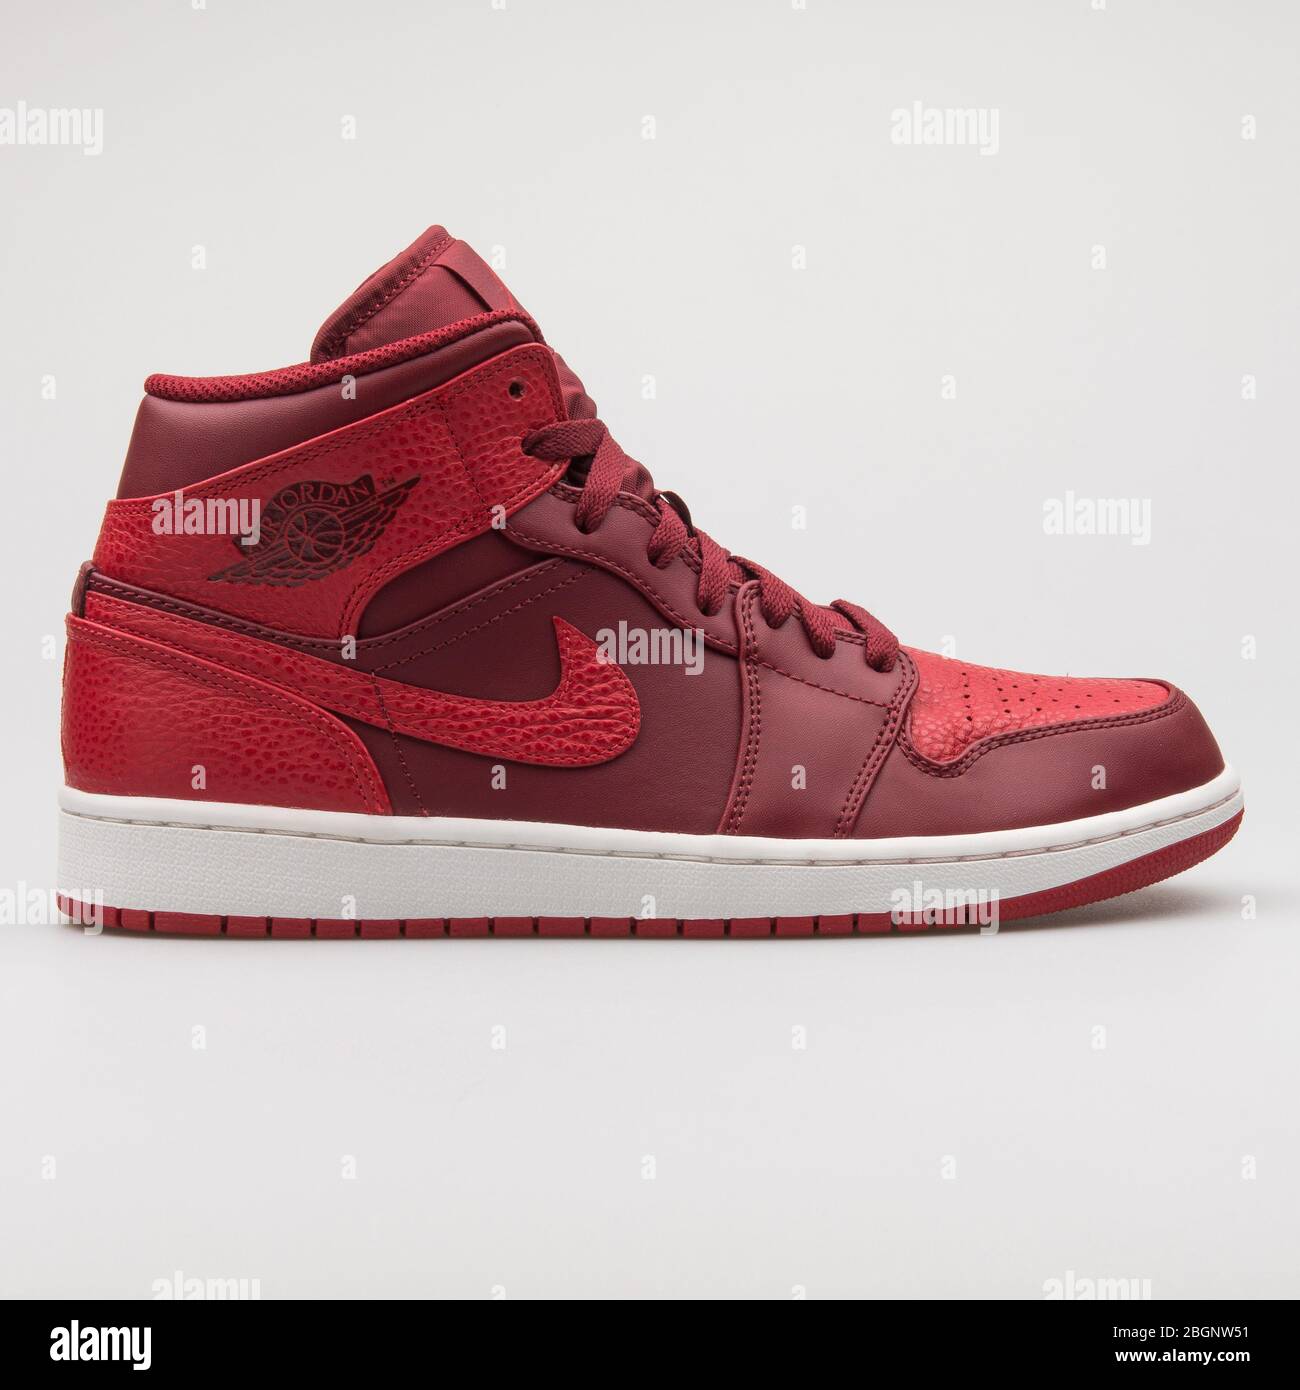 Nike air jordan 1 sneakers hi-res stock photography and images - Alamy